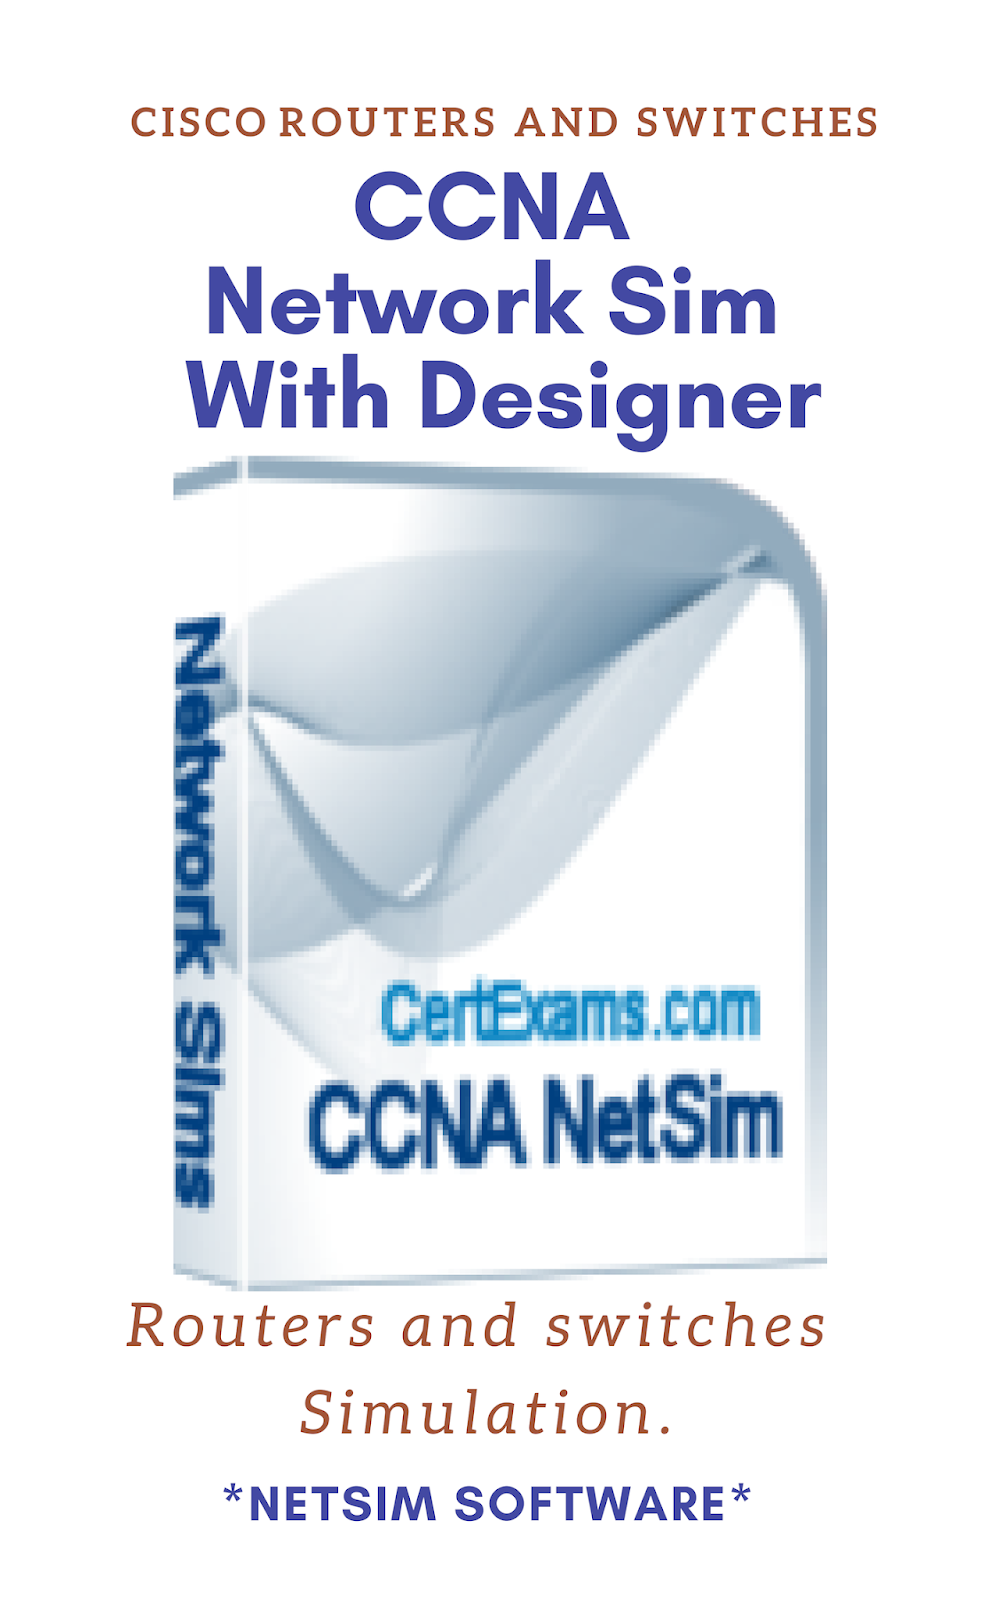 ccna-network-simulator-with-designer